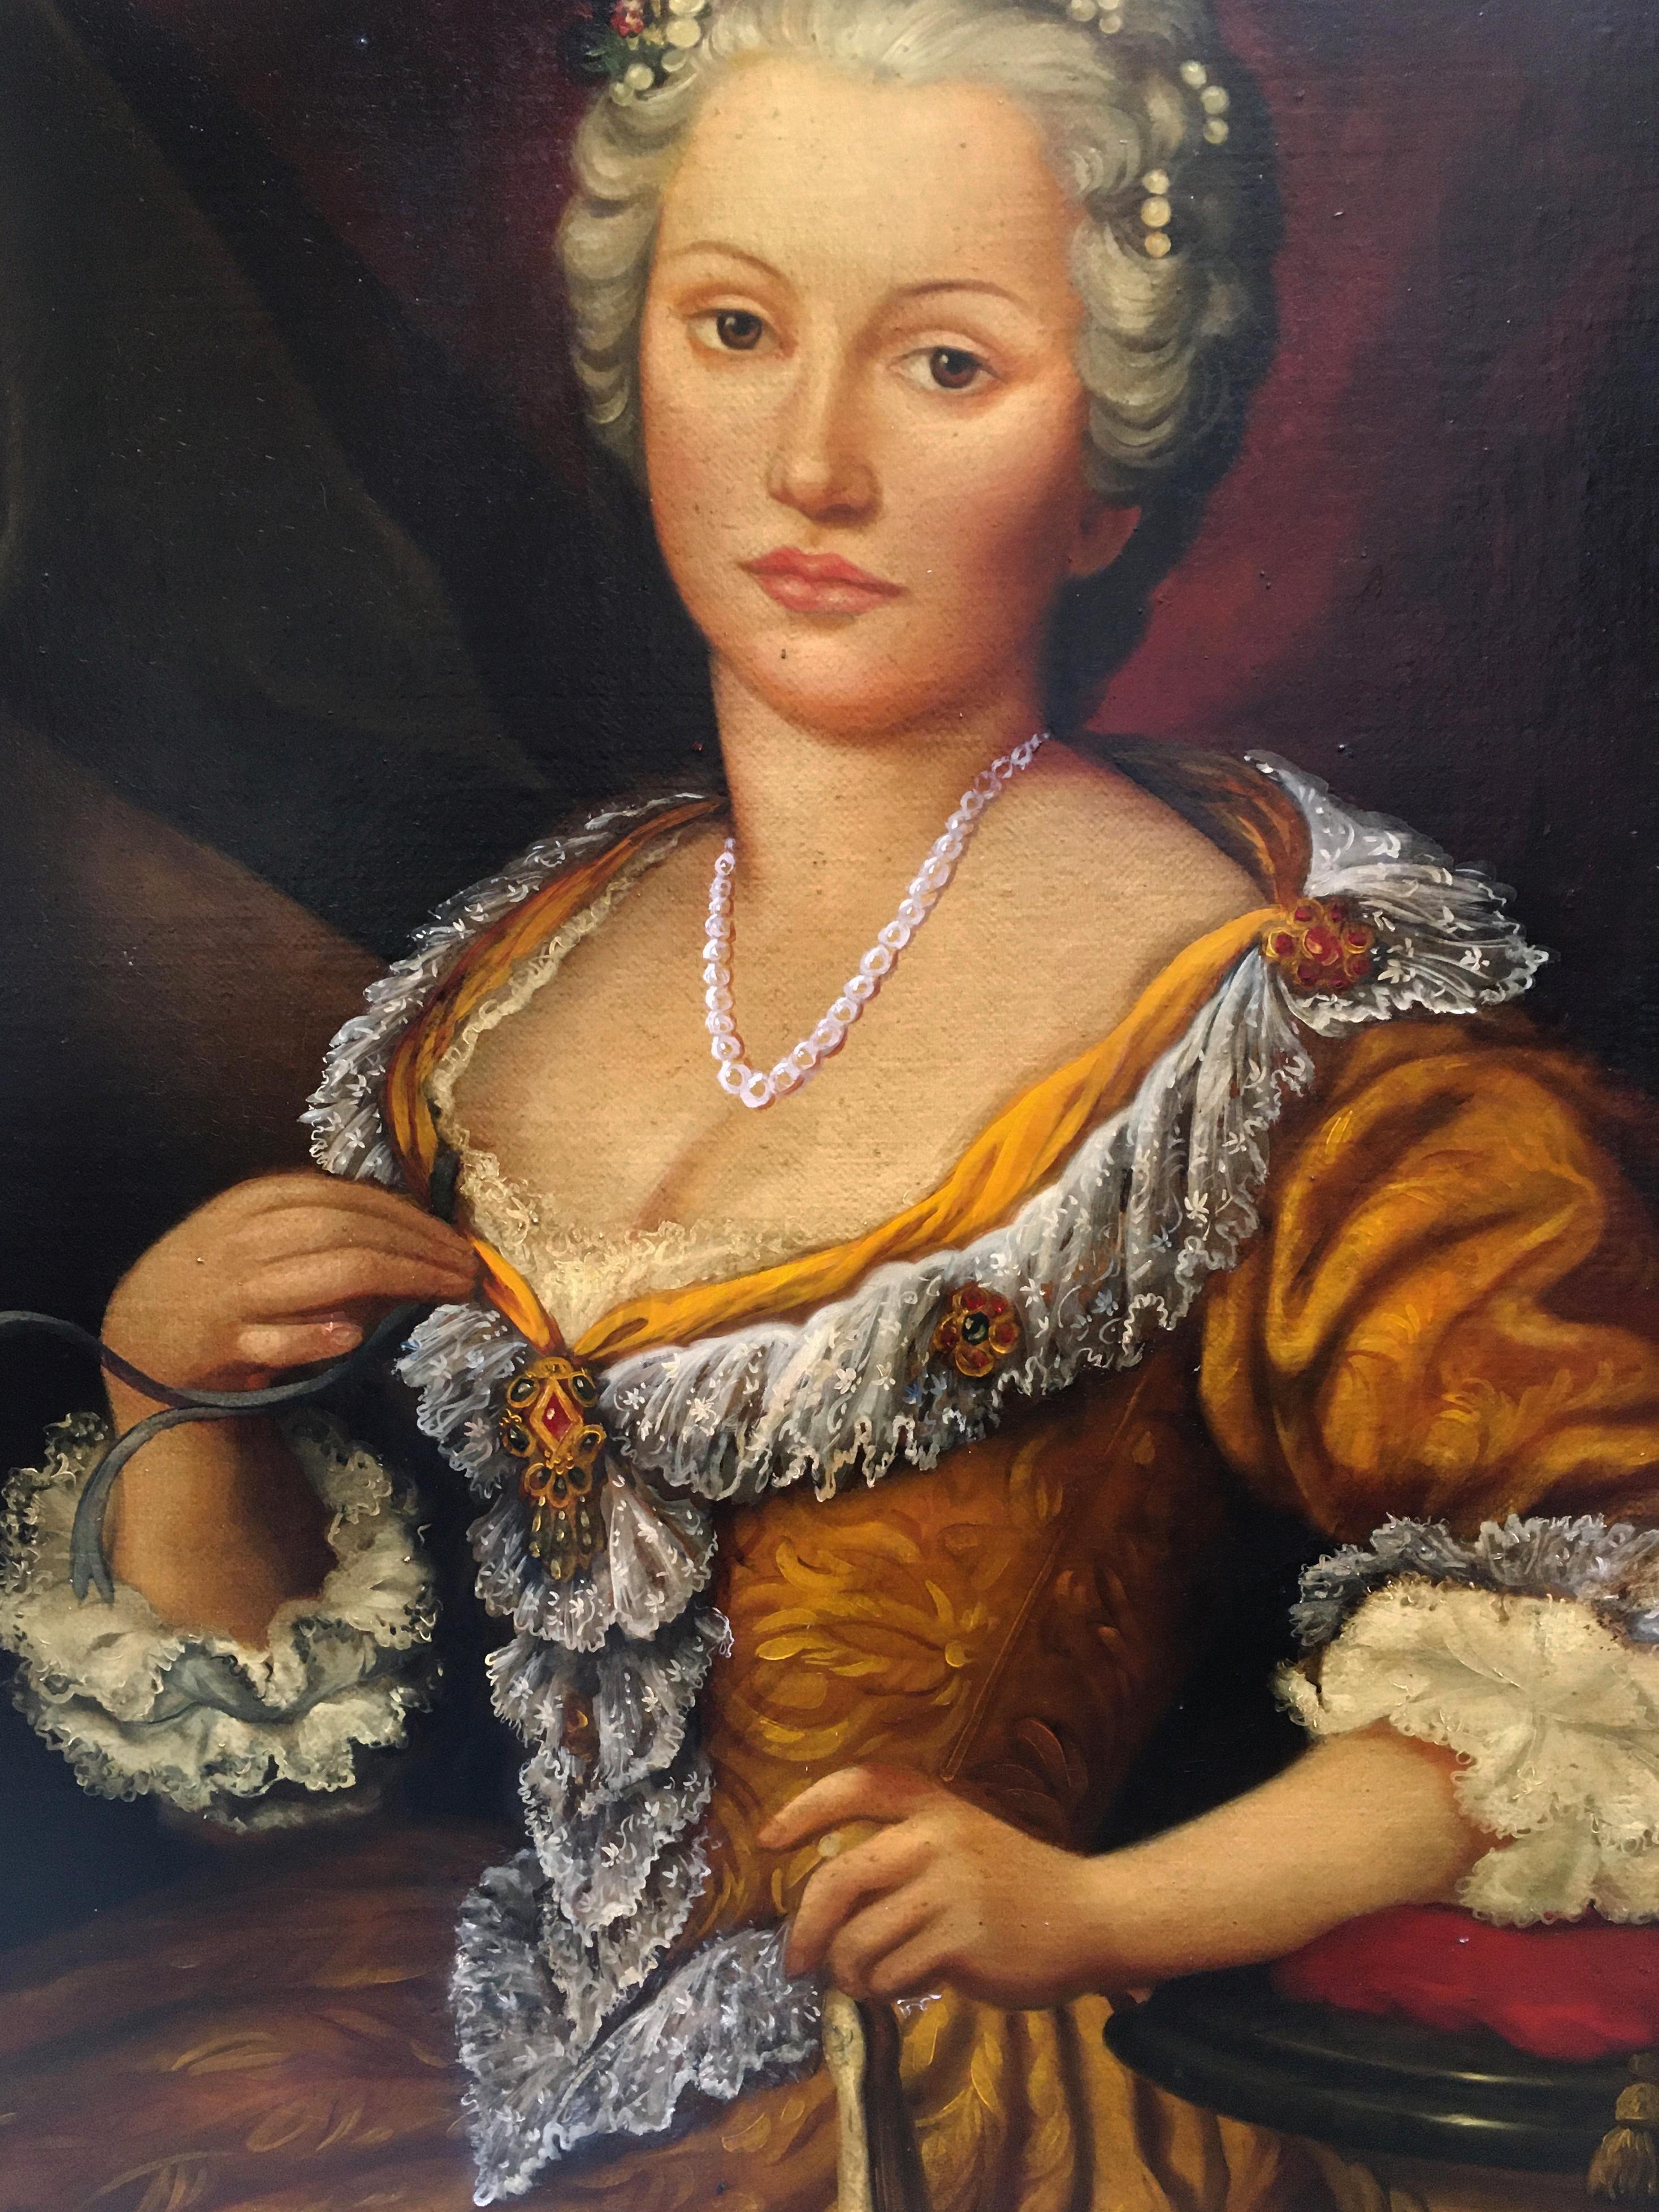 PORTRAIT OF A LADY E.Frattini - English School - Italy Figurative Oil on Canvas  - Baroque Painting by Ettore Frattini